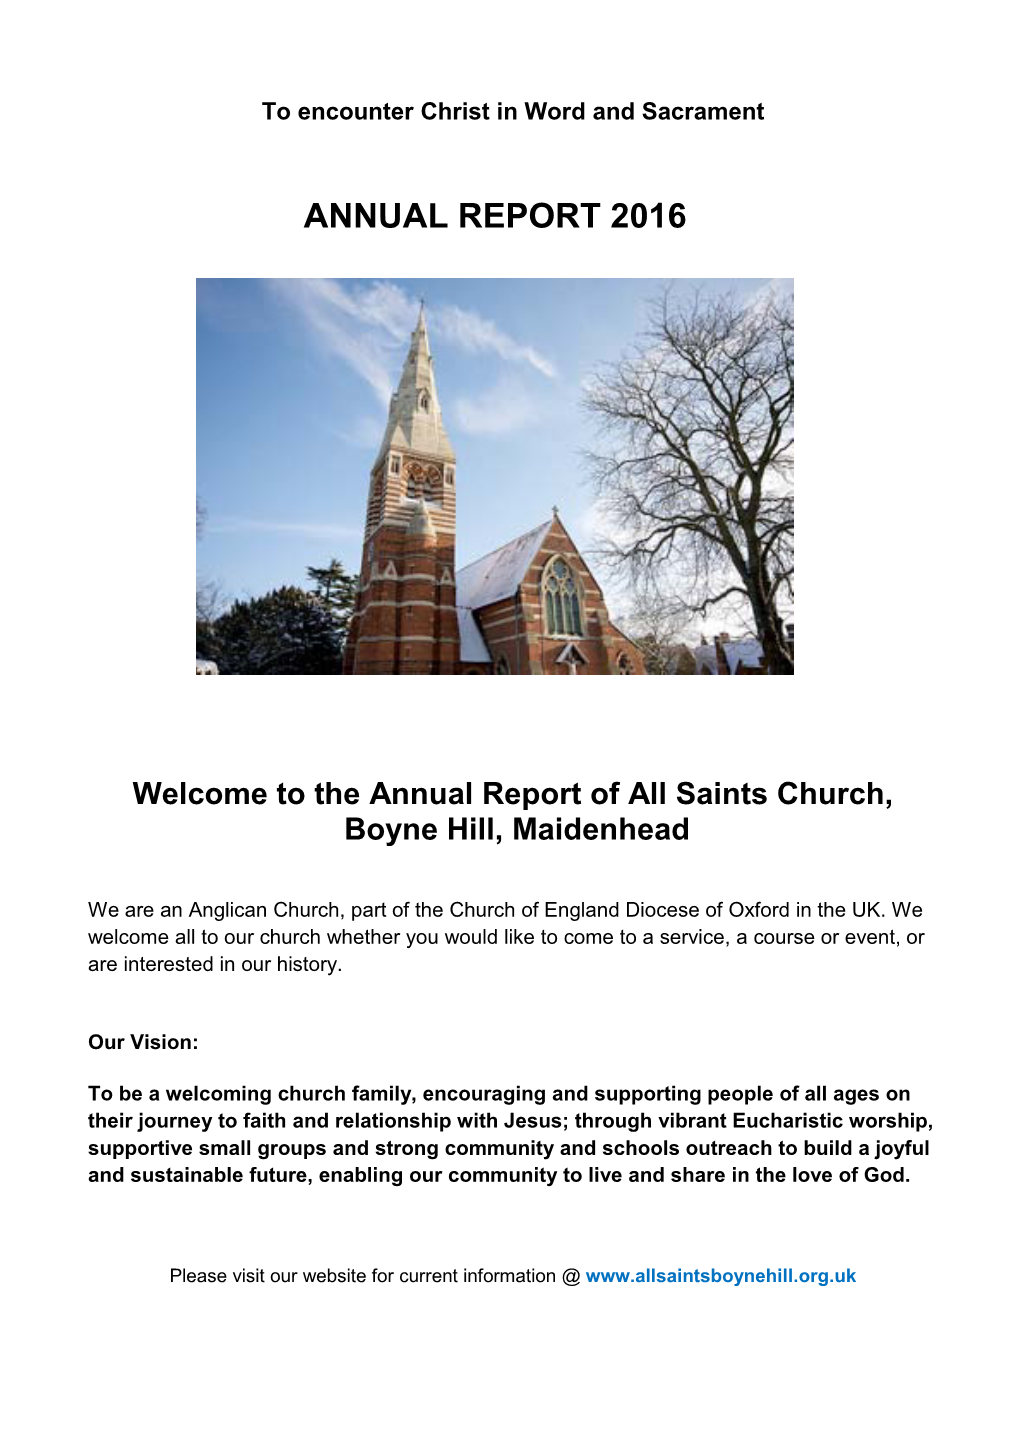 The Annual Report of All Saints Church, Boyne Hill, Maidenhead